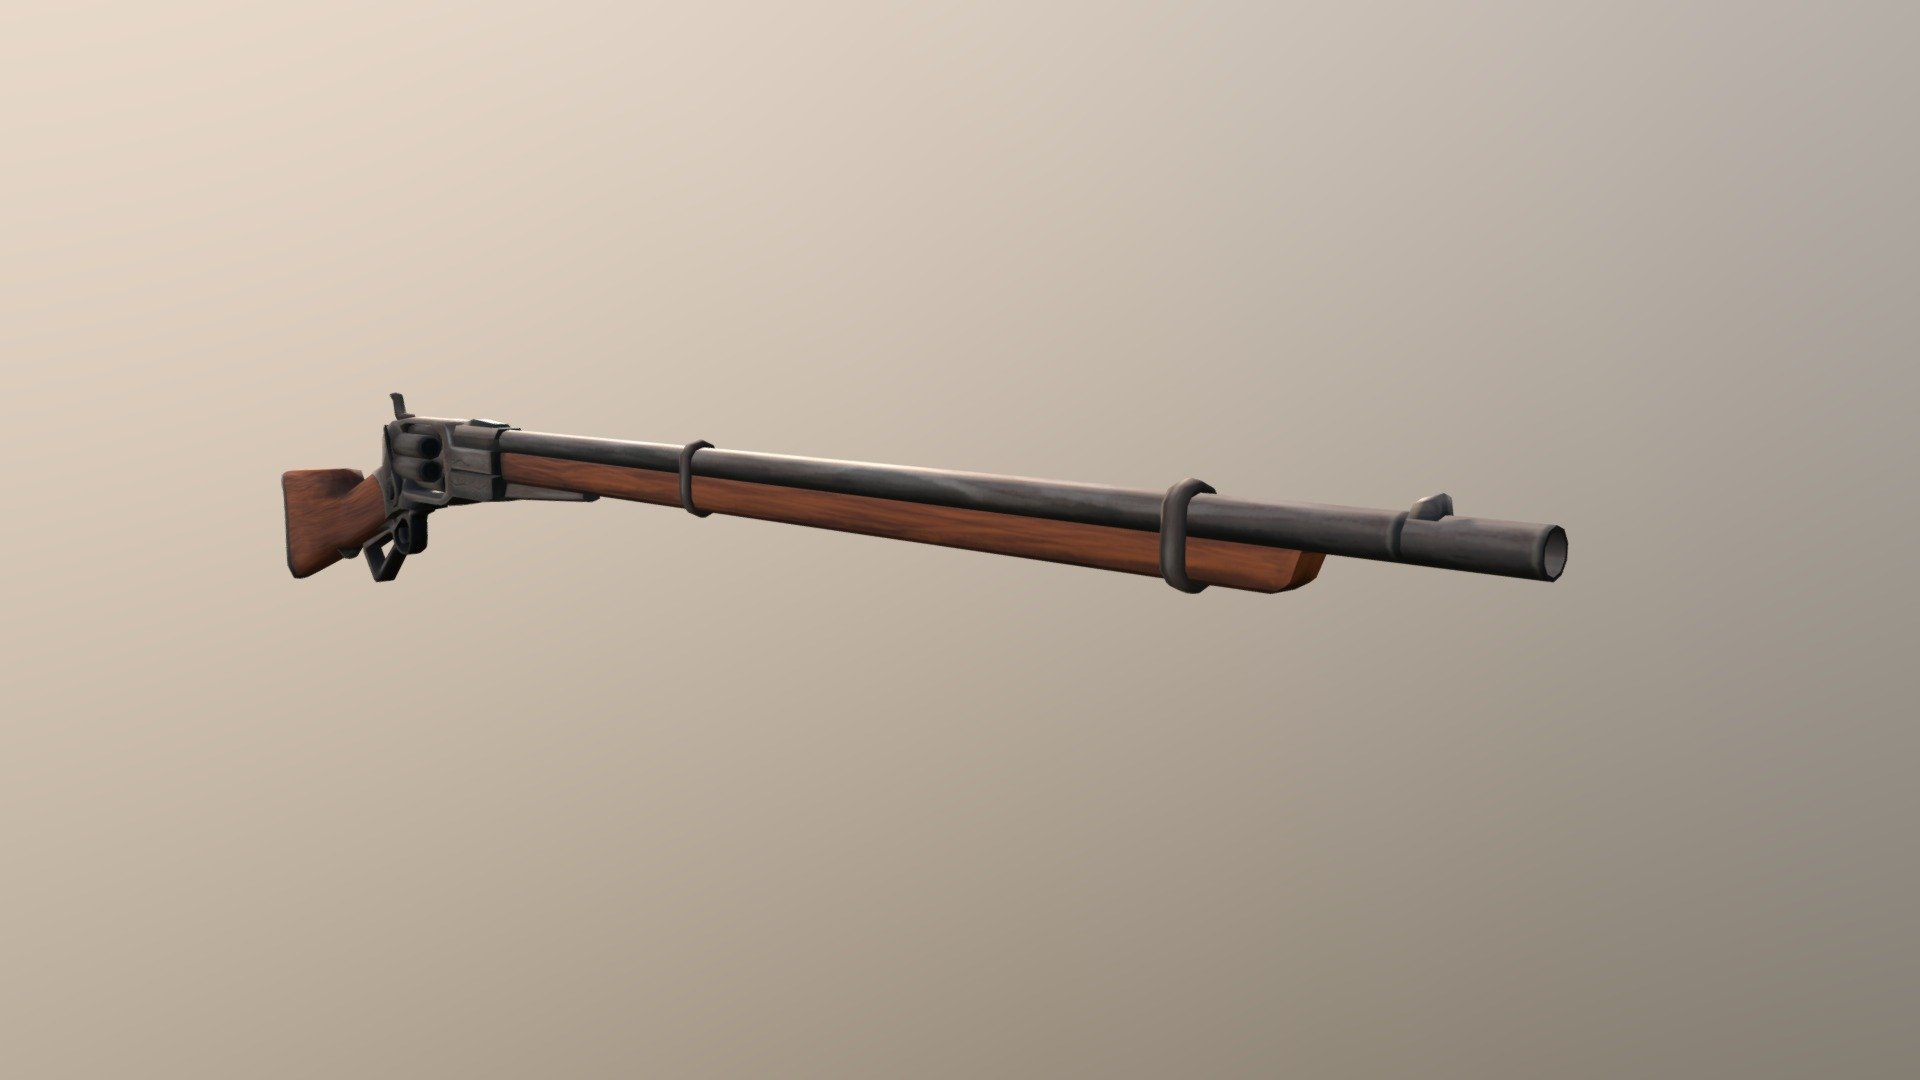 Rancher's Rifle